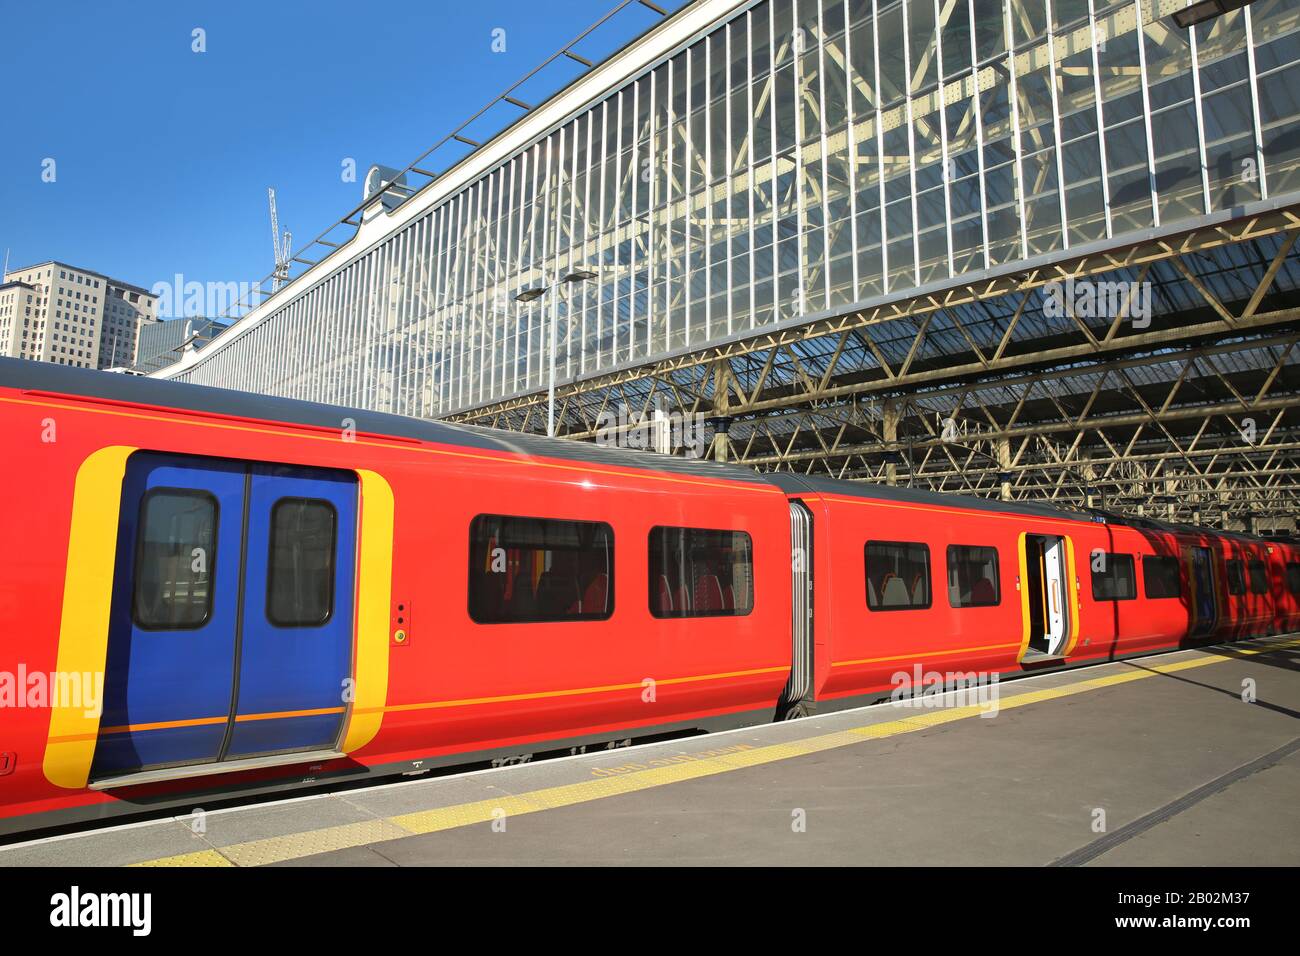 Train waiting at the platform of Waterloo station, London, England. Stock Photo